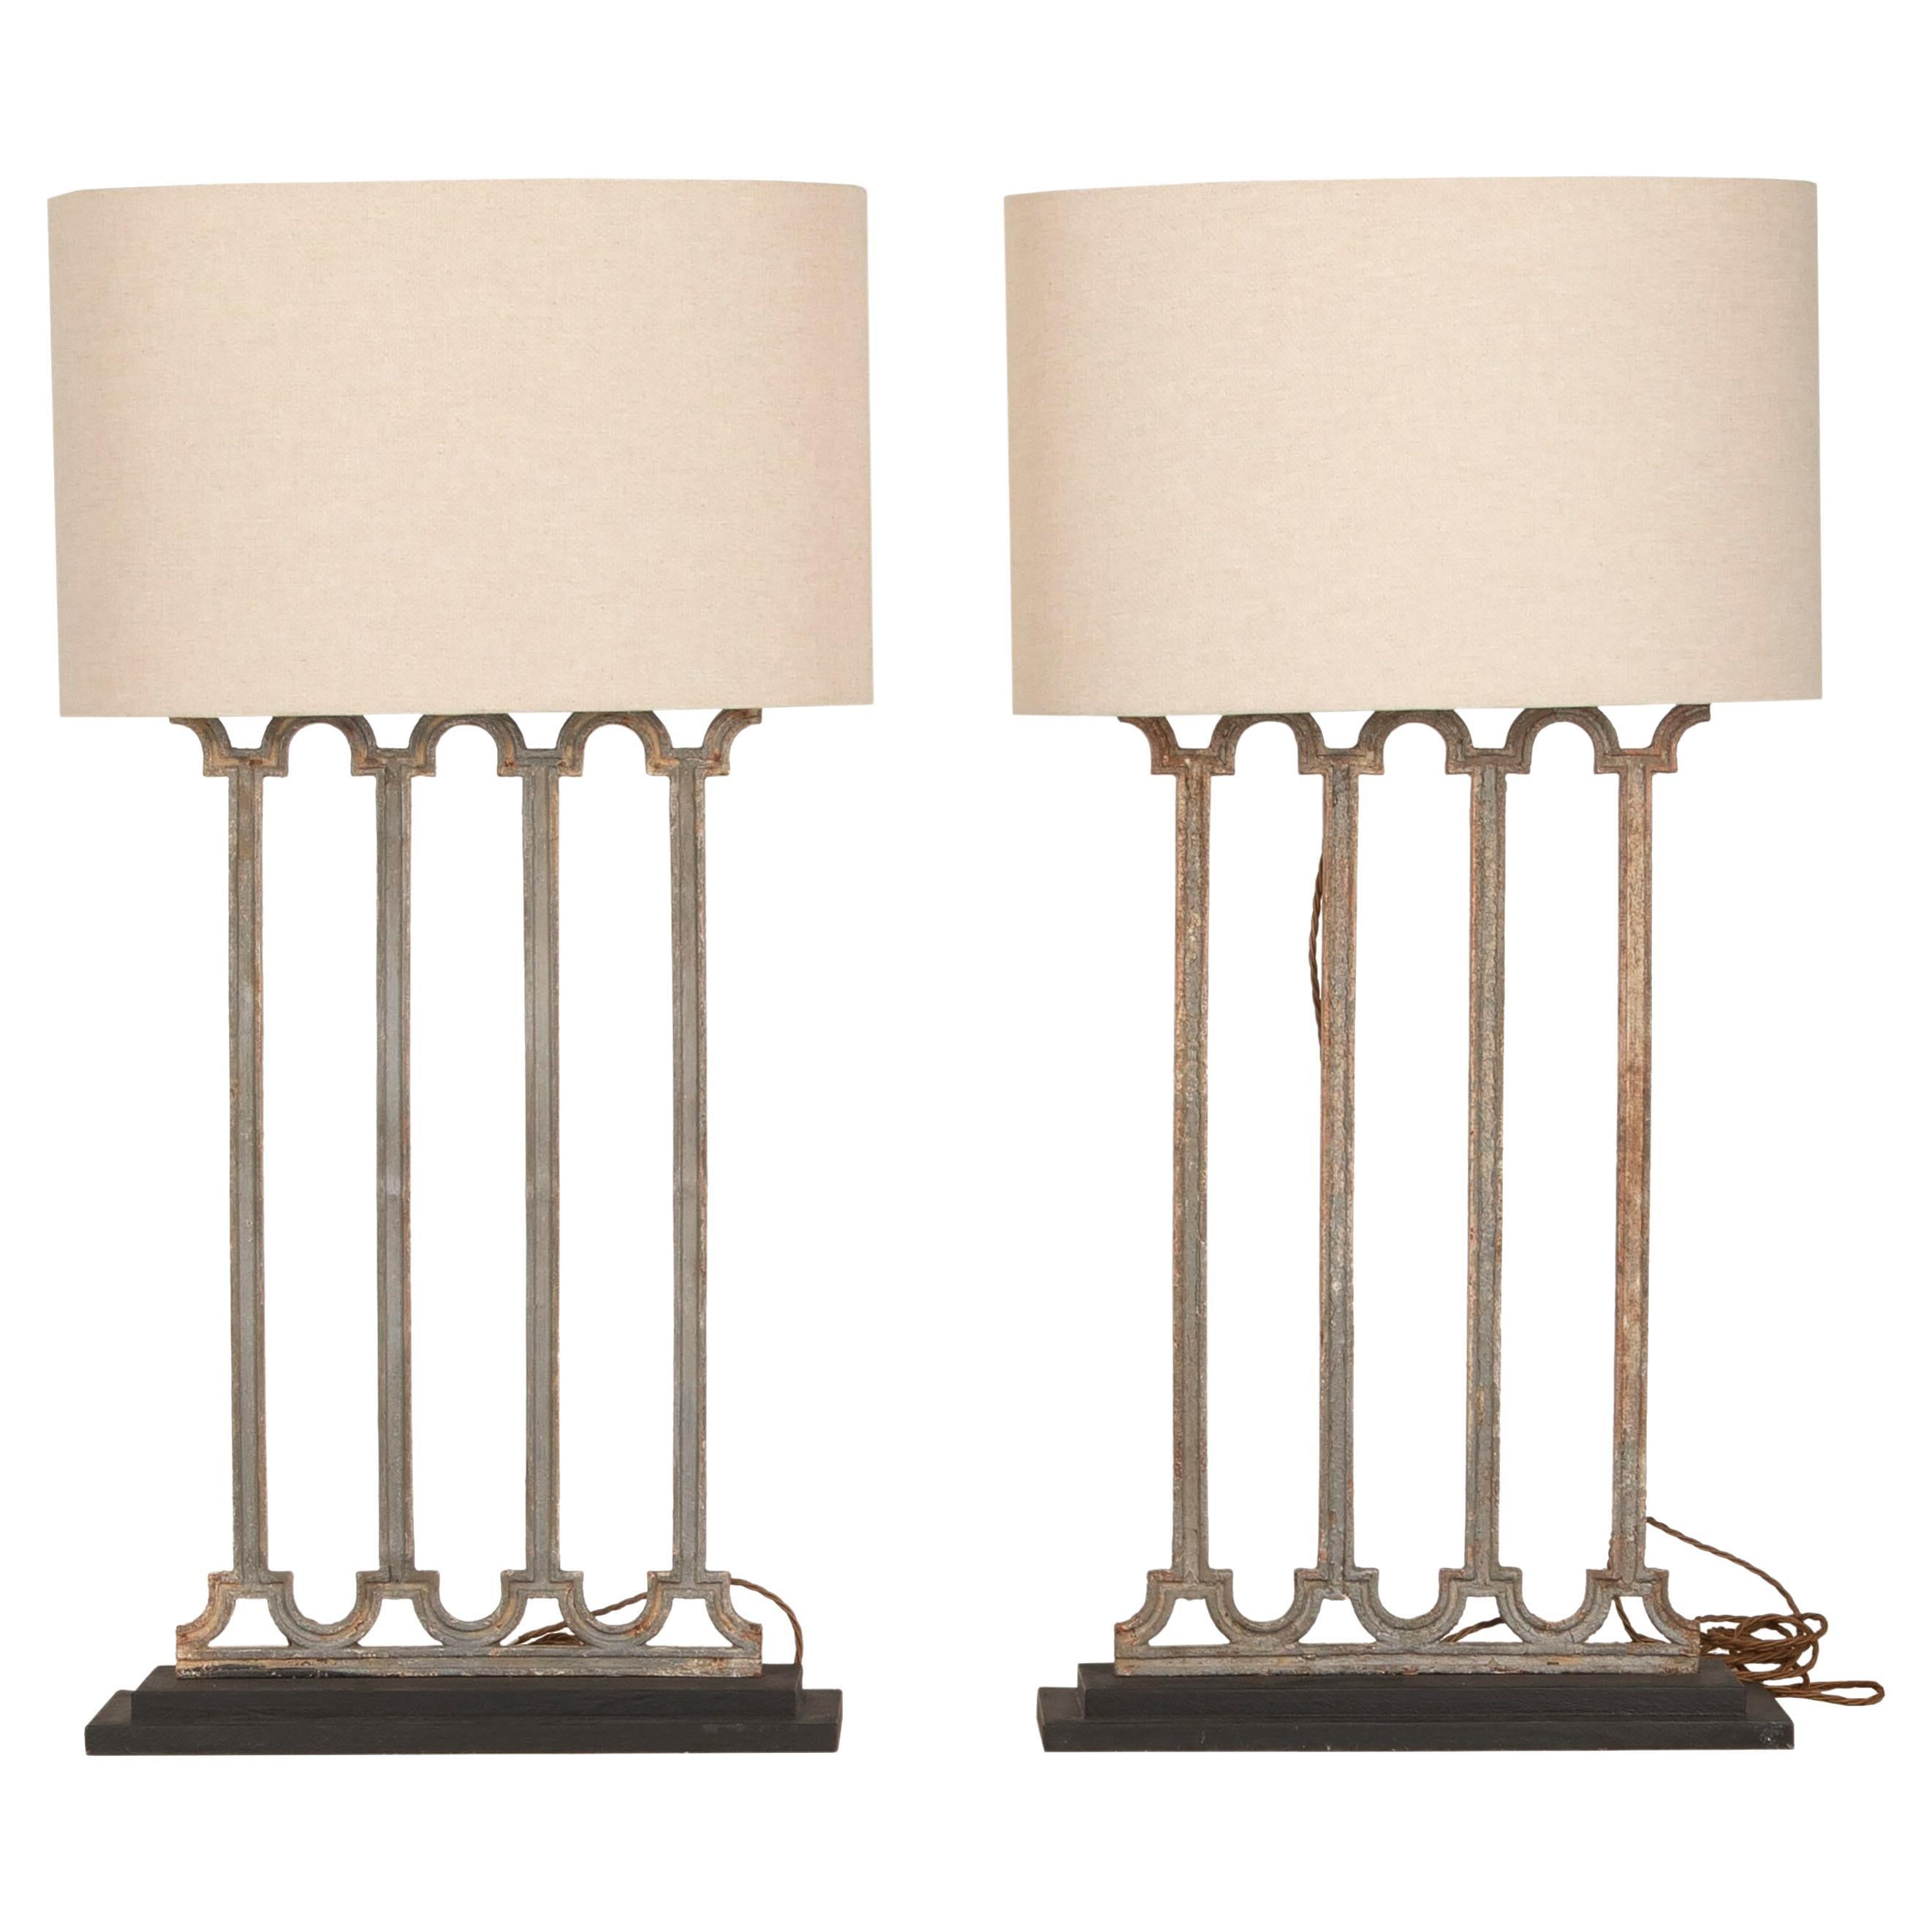 Pair of Wrought Iron Balustrade Lamps